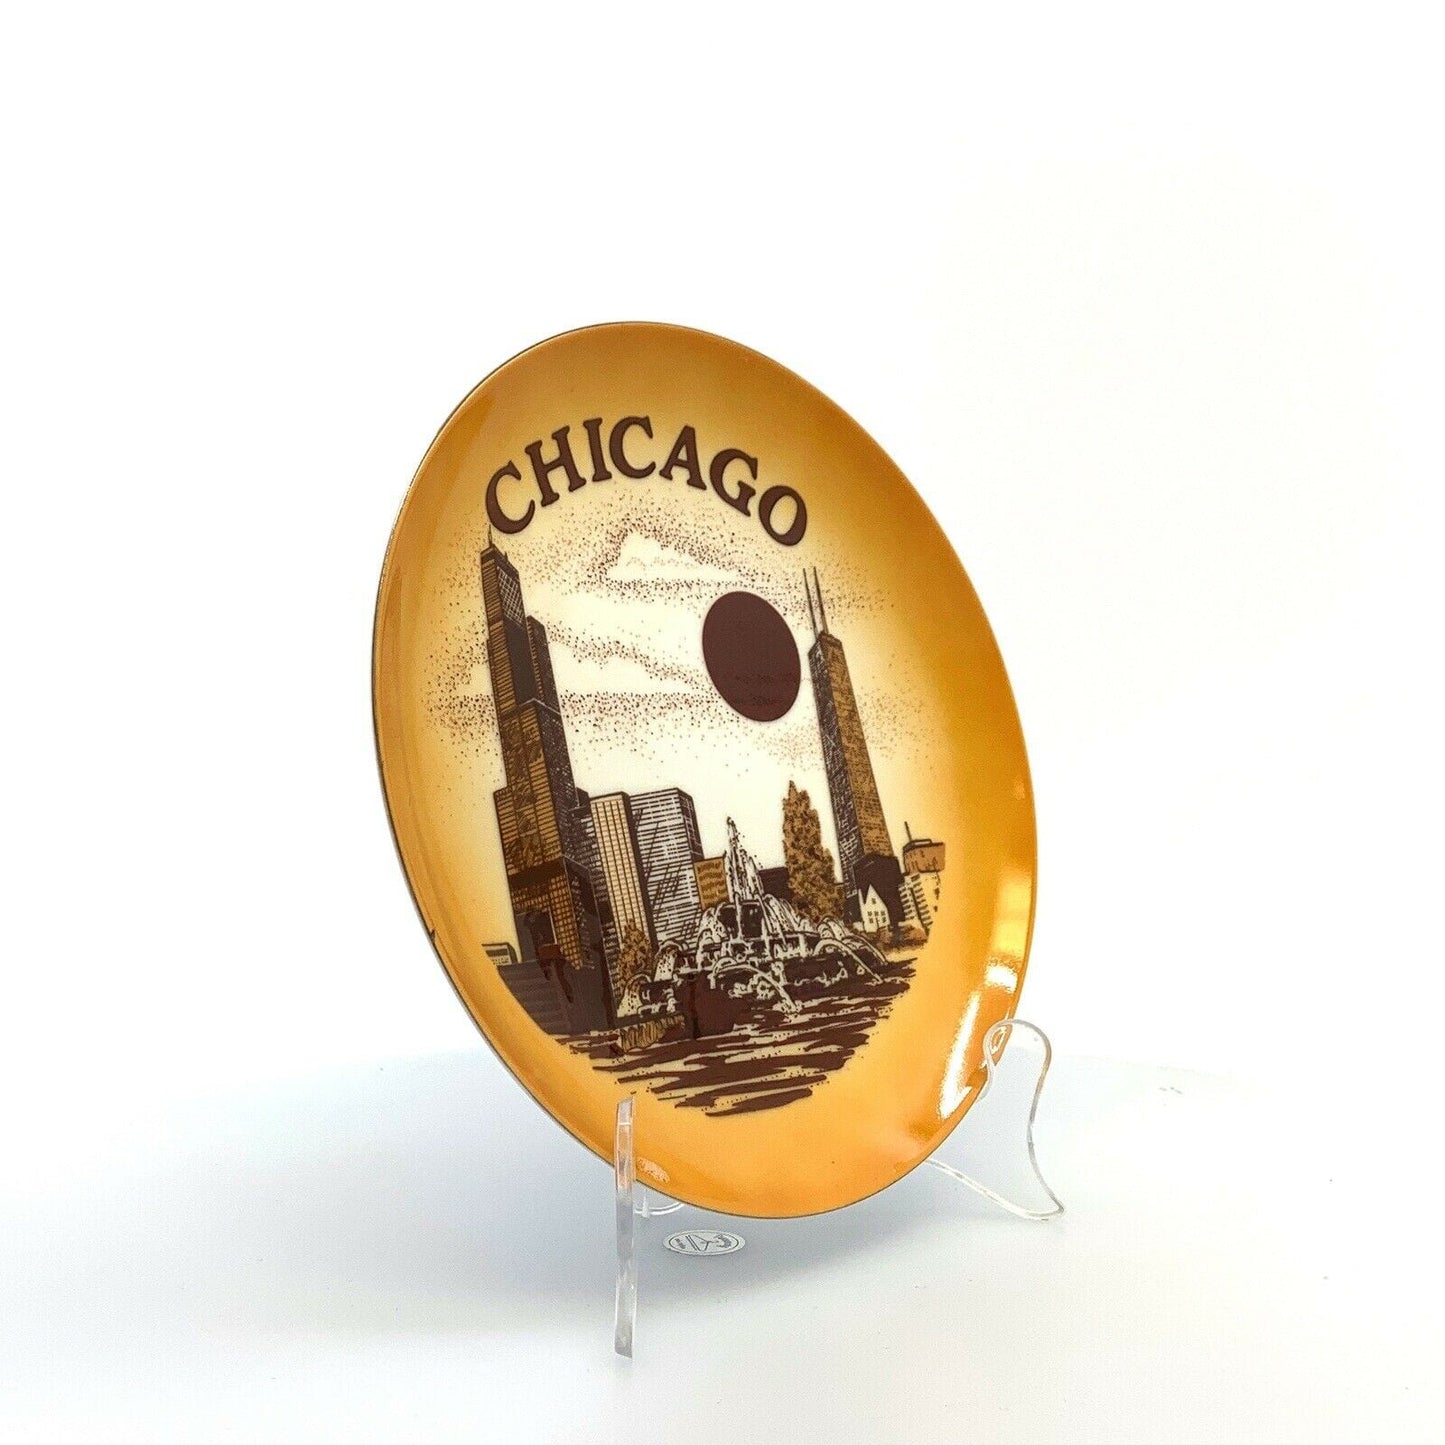 City Of Chicago Souvenir Collectible Plate, Yellow - 9” - parsimonyshoppes